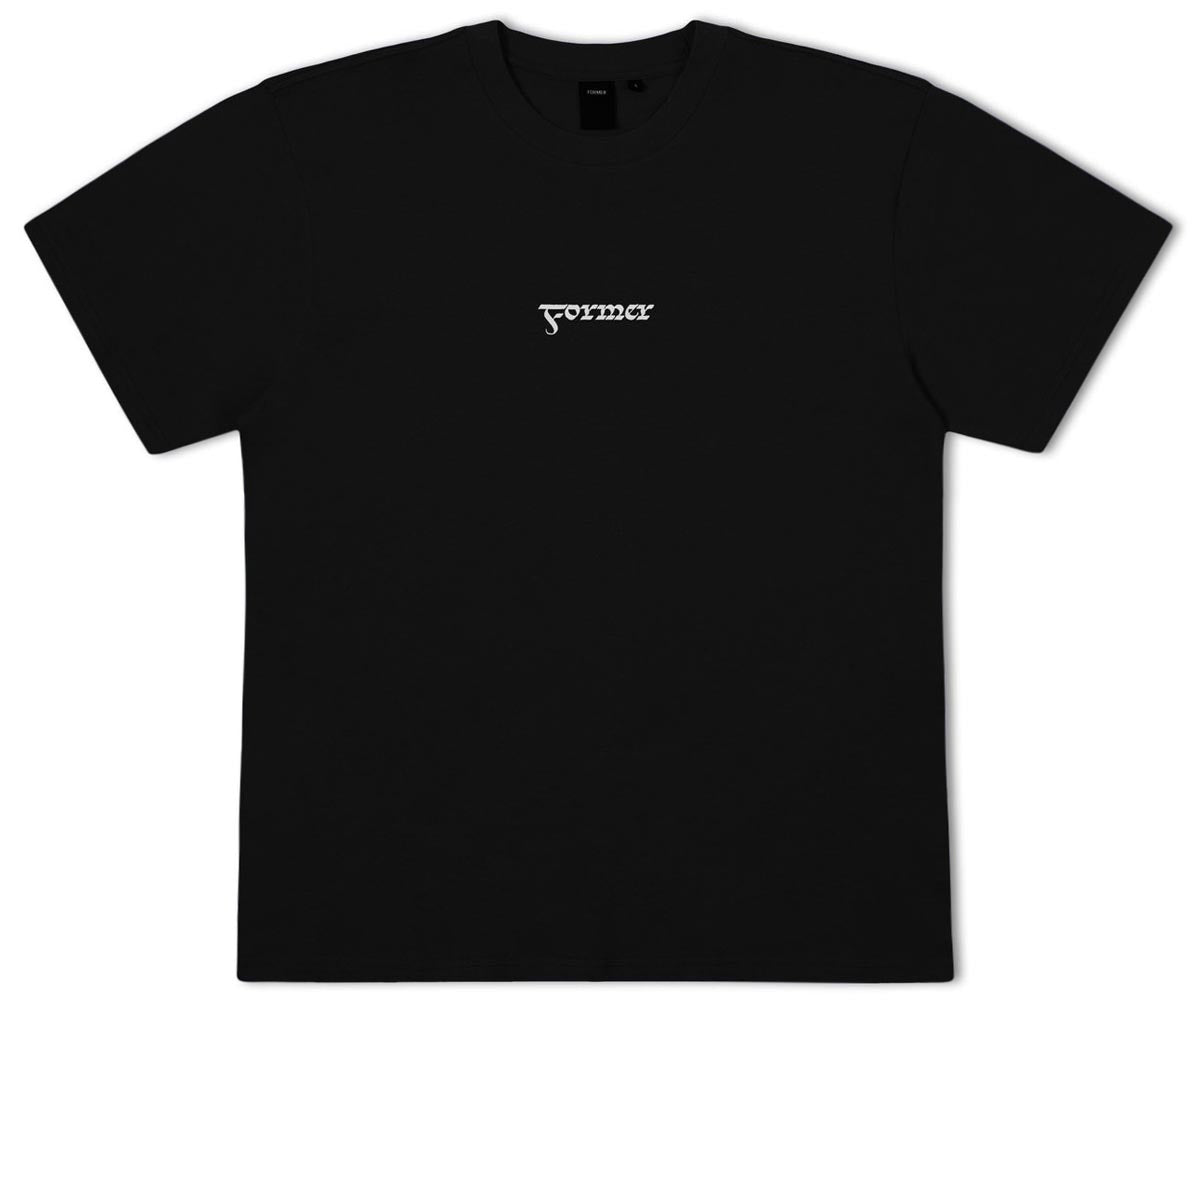 Former Tribute T-Shirt - Black image 1